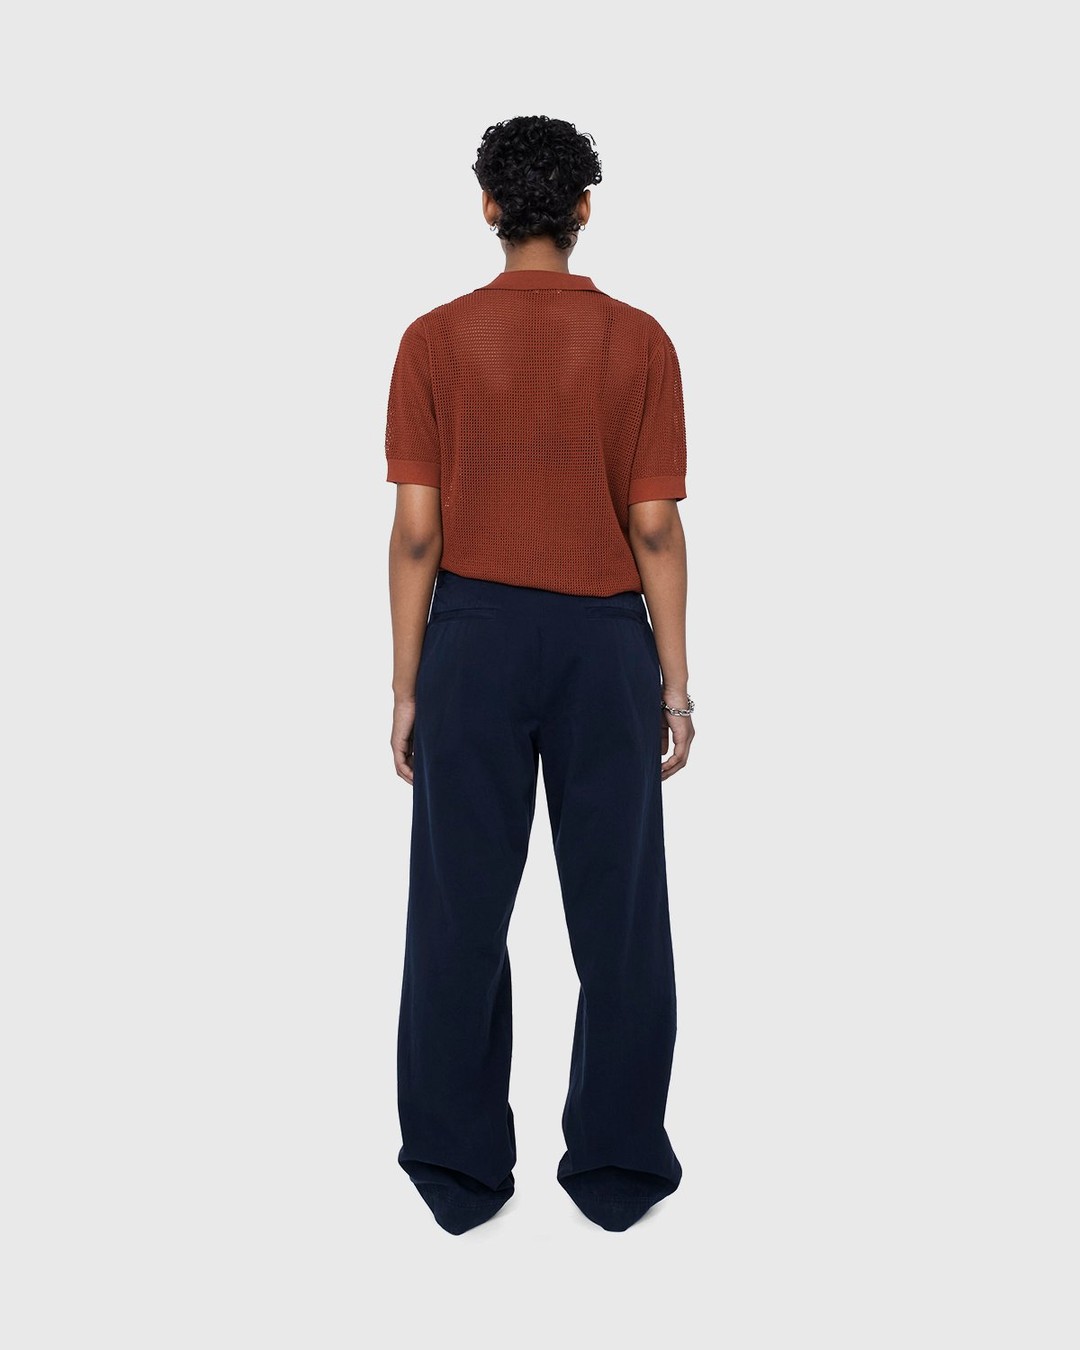 Dries van Noten – Jael Polo Shirt Brique - Polos - Red - Image 7